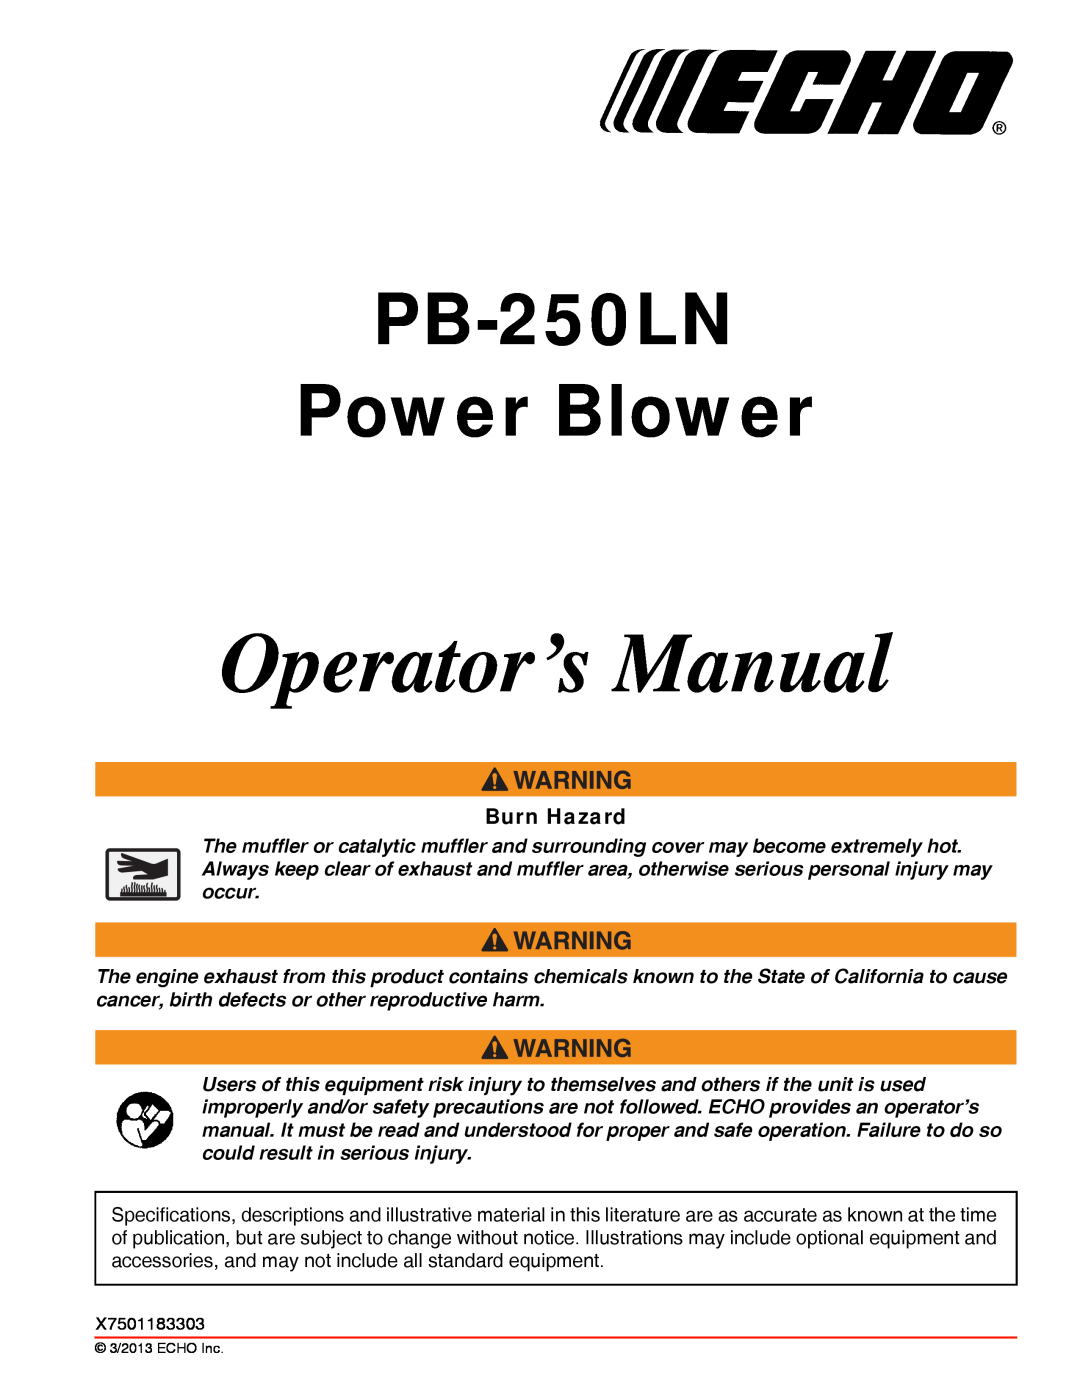 Echo specifications Burn Hazard, Operator’s Manual, PB-250LN Power Blower 